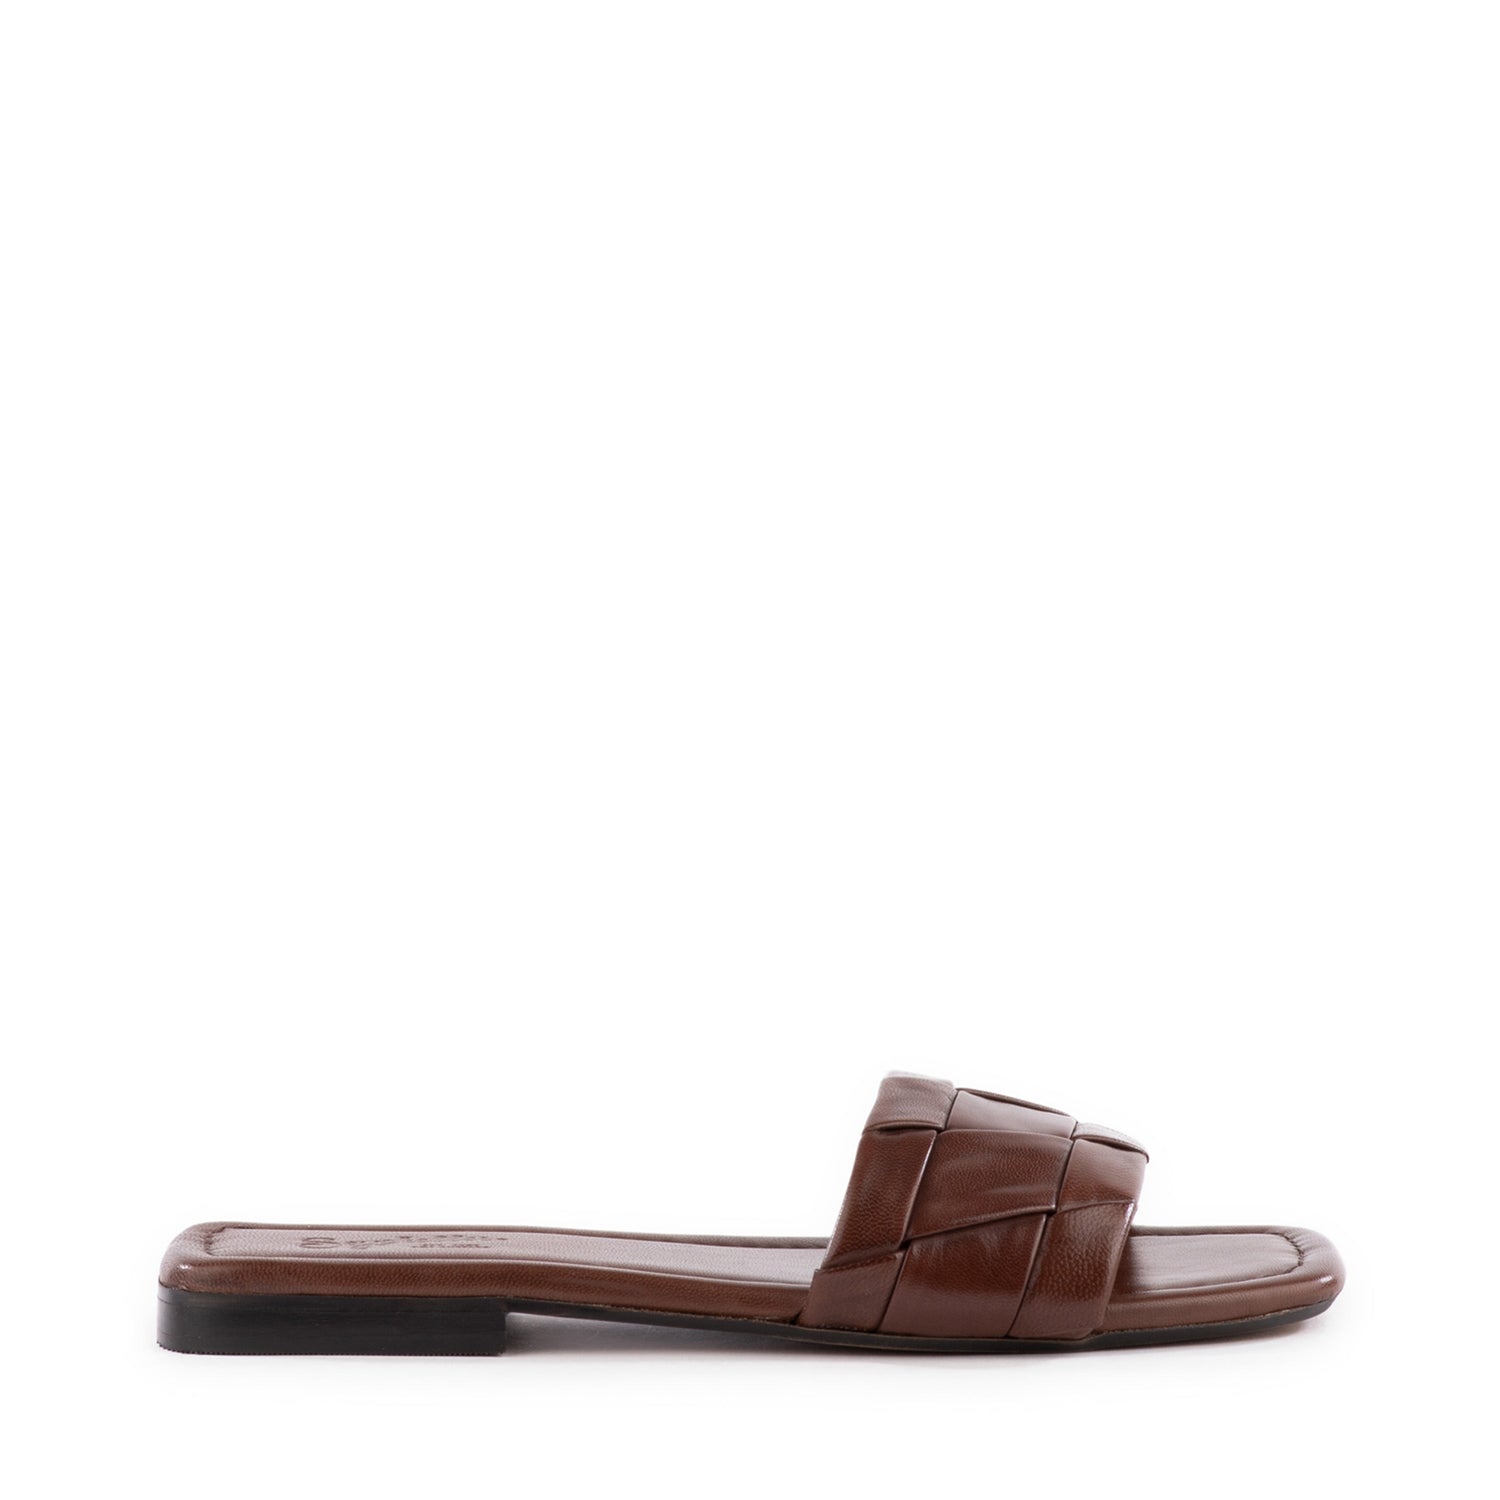 Sandals | Seychelles Footwear